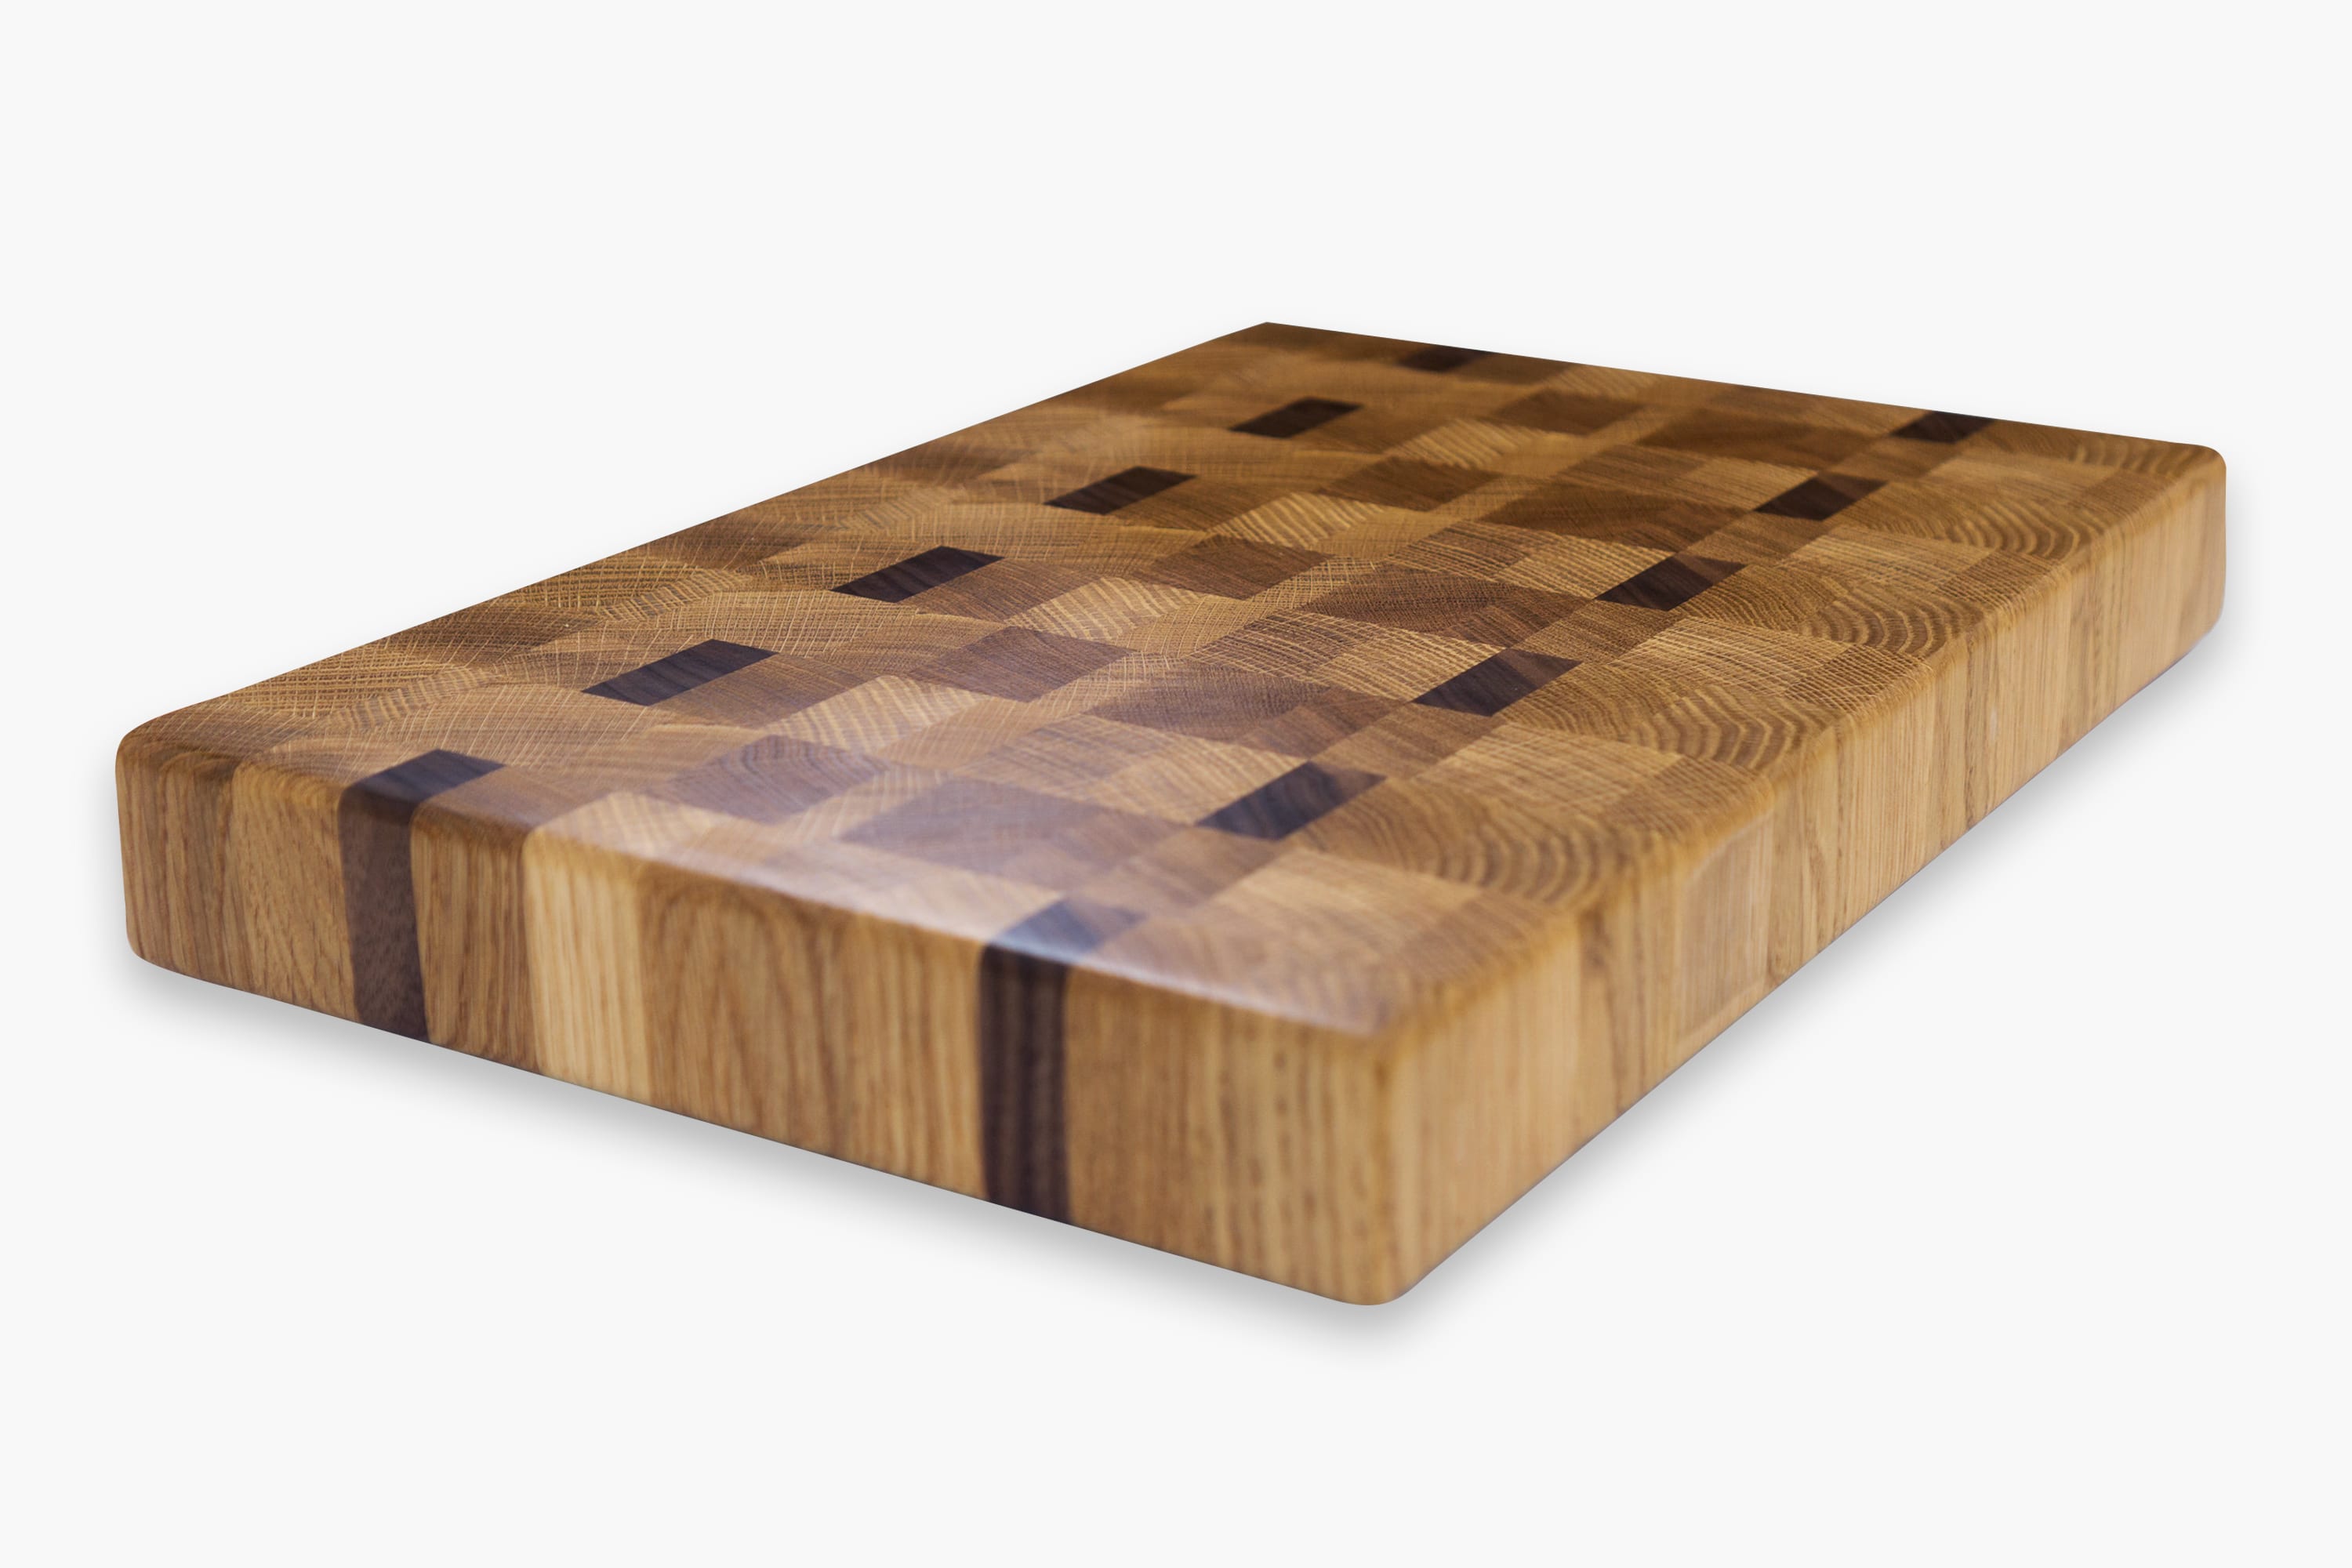 Extra large white oak end grain cutting board